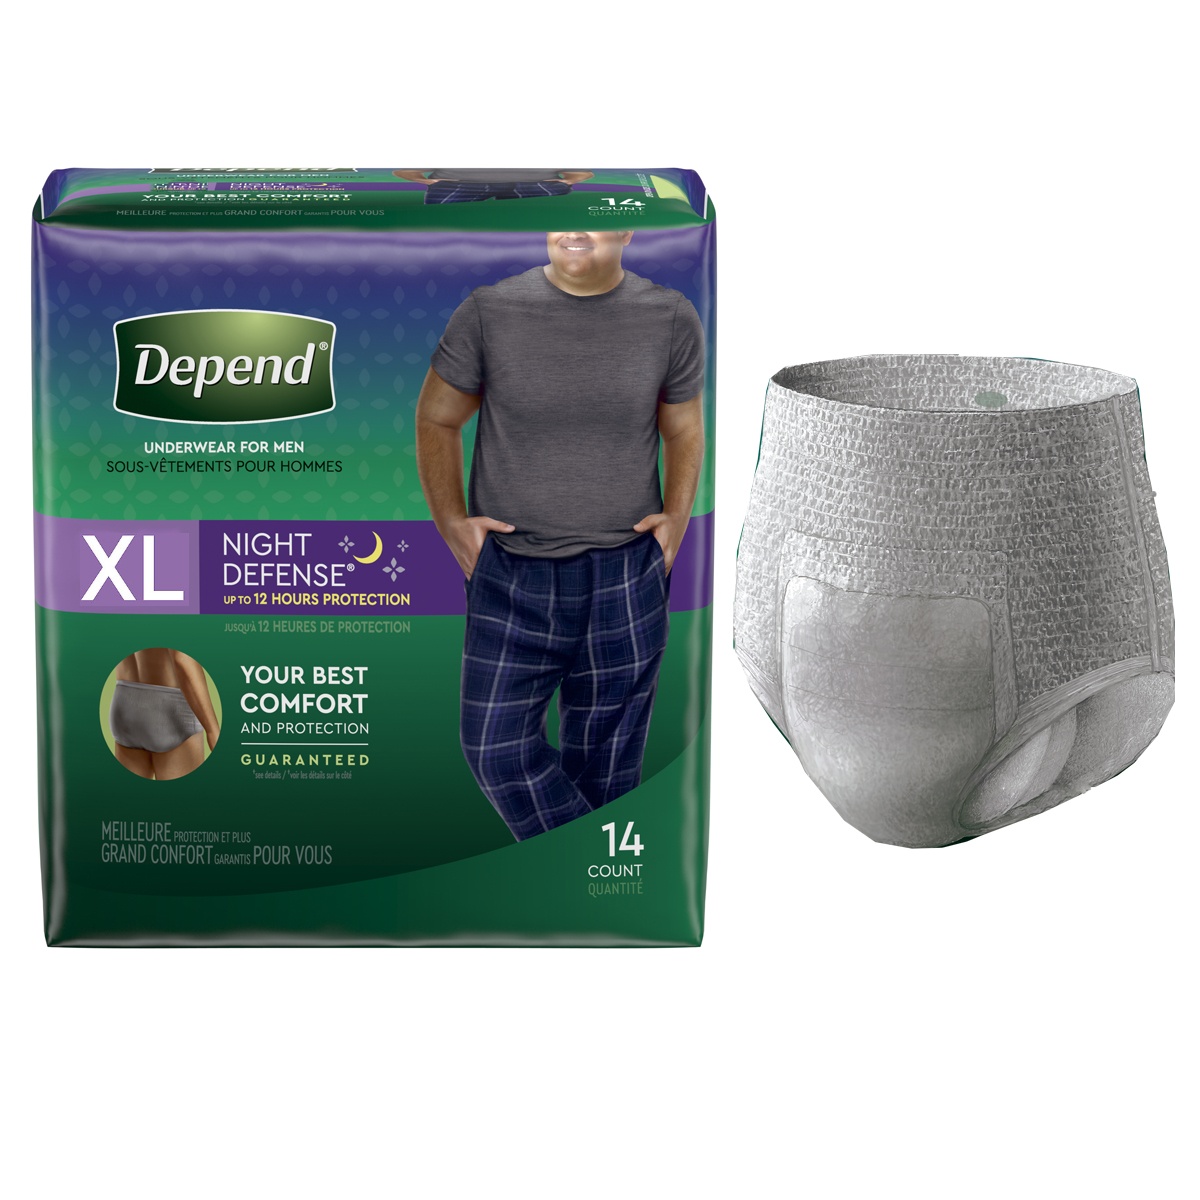 Depend Night Defense Underwear for Men L, 14 Count 